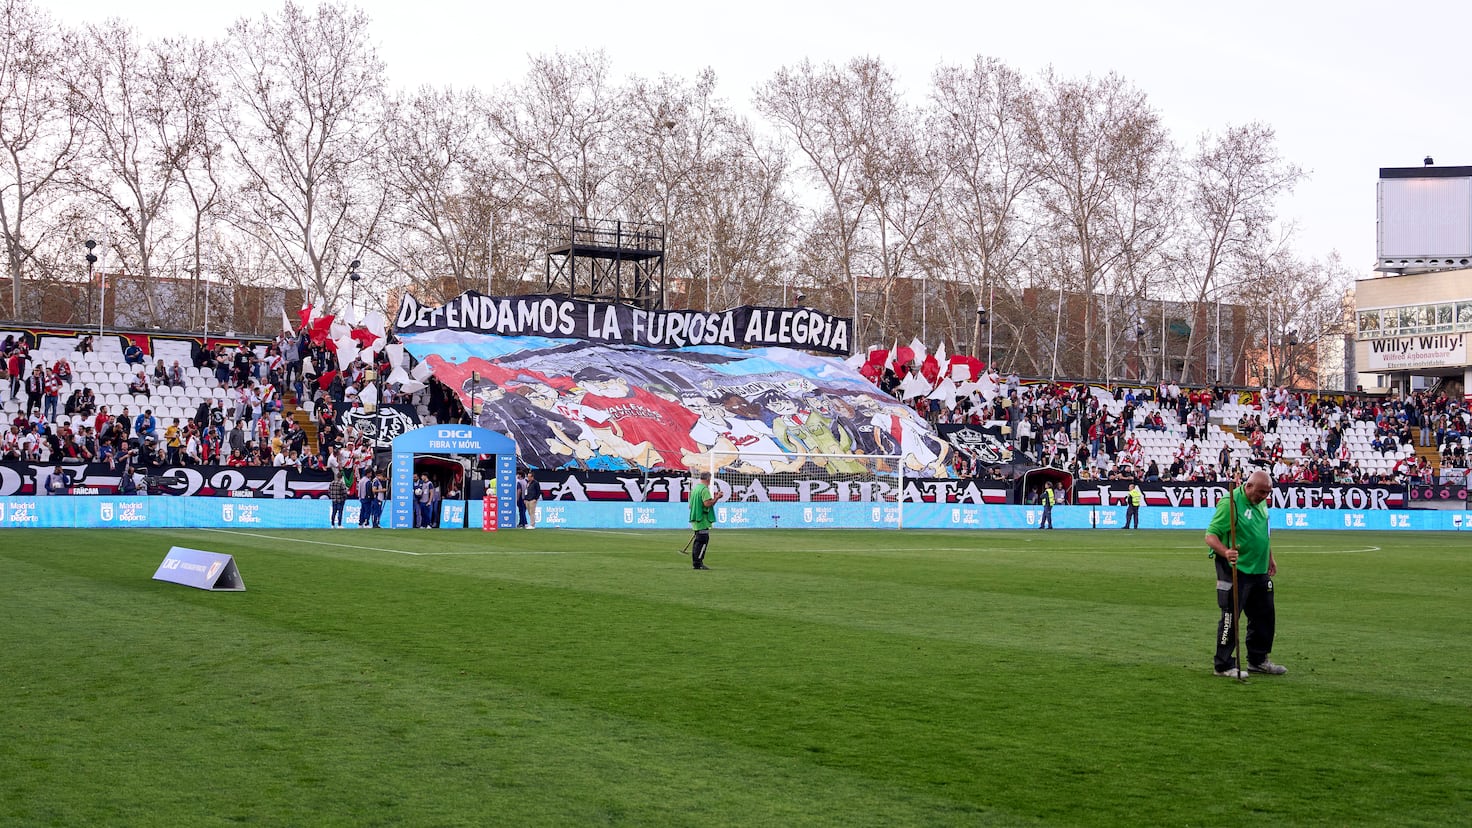 Rayo Vallecano's Centenary Celebrations: A Symbol of Football Passion and Community Pride